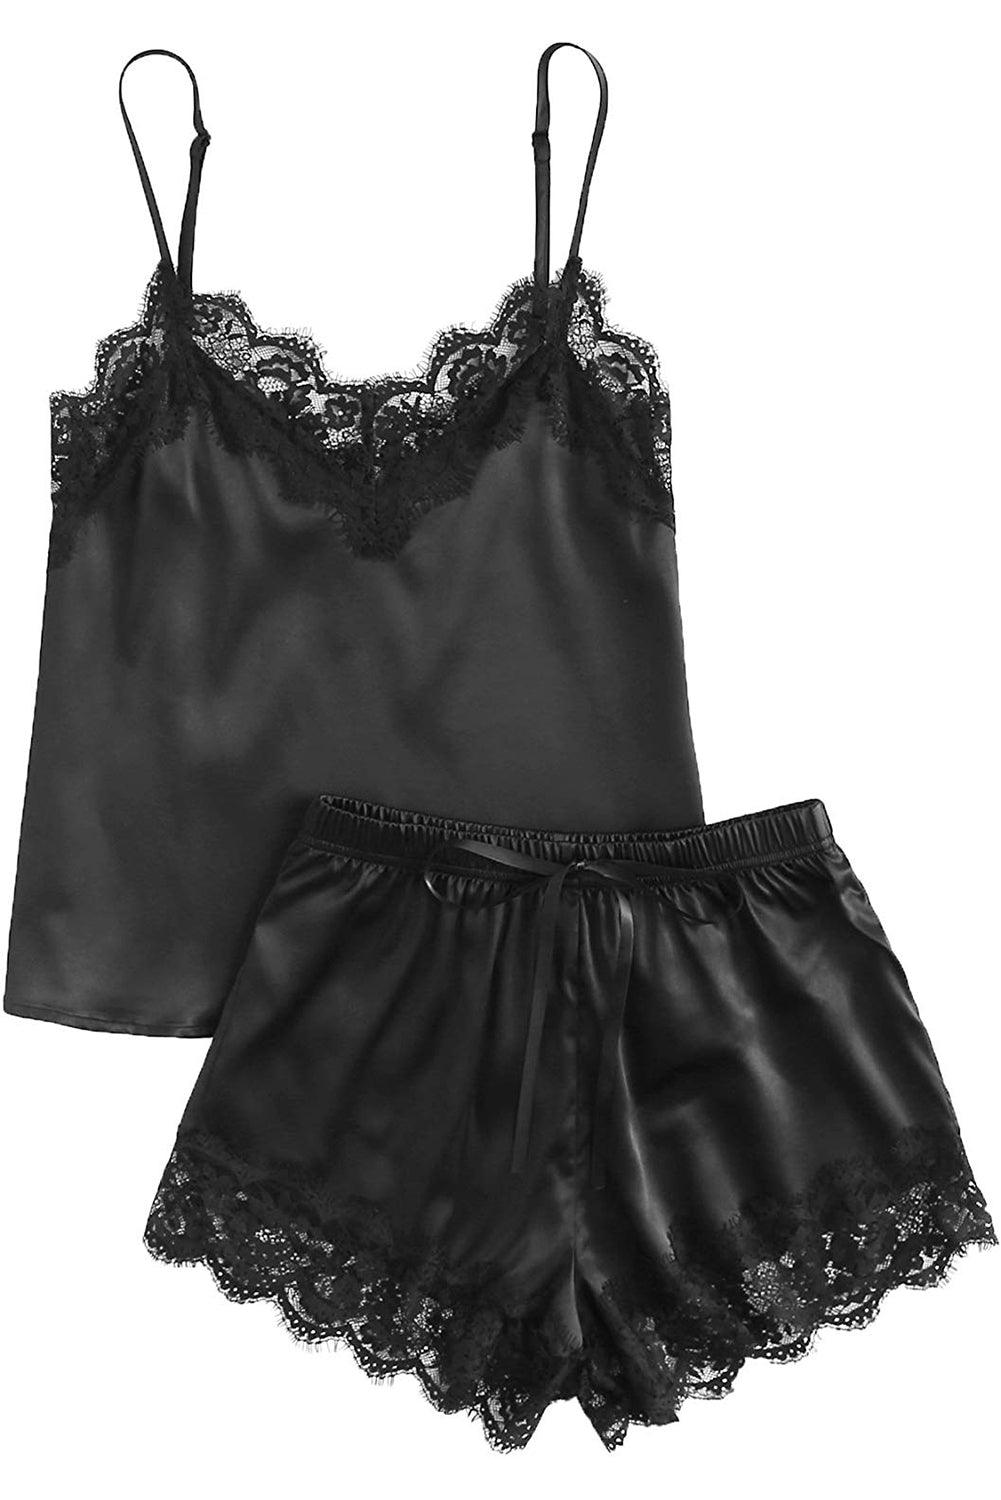 Black Lace Satin Cami Top and Shorts Sleepwear Pajamas Set - VirtuousWares:Global